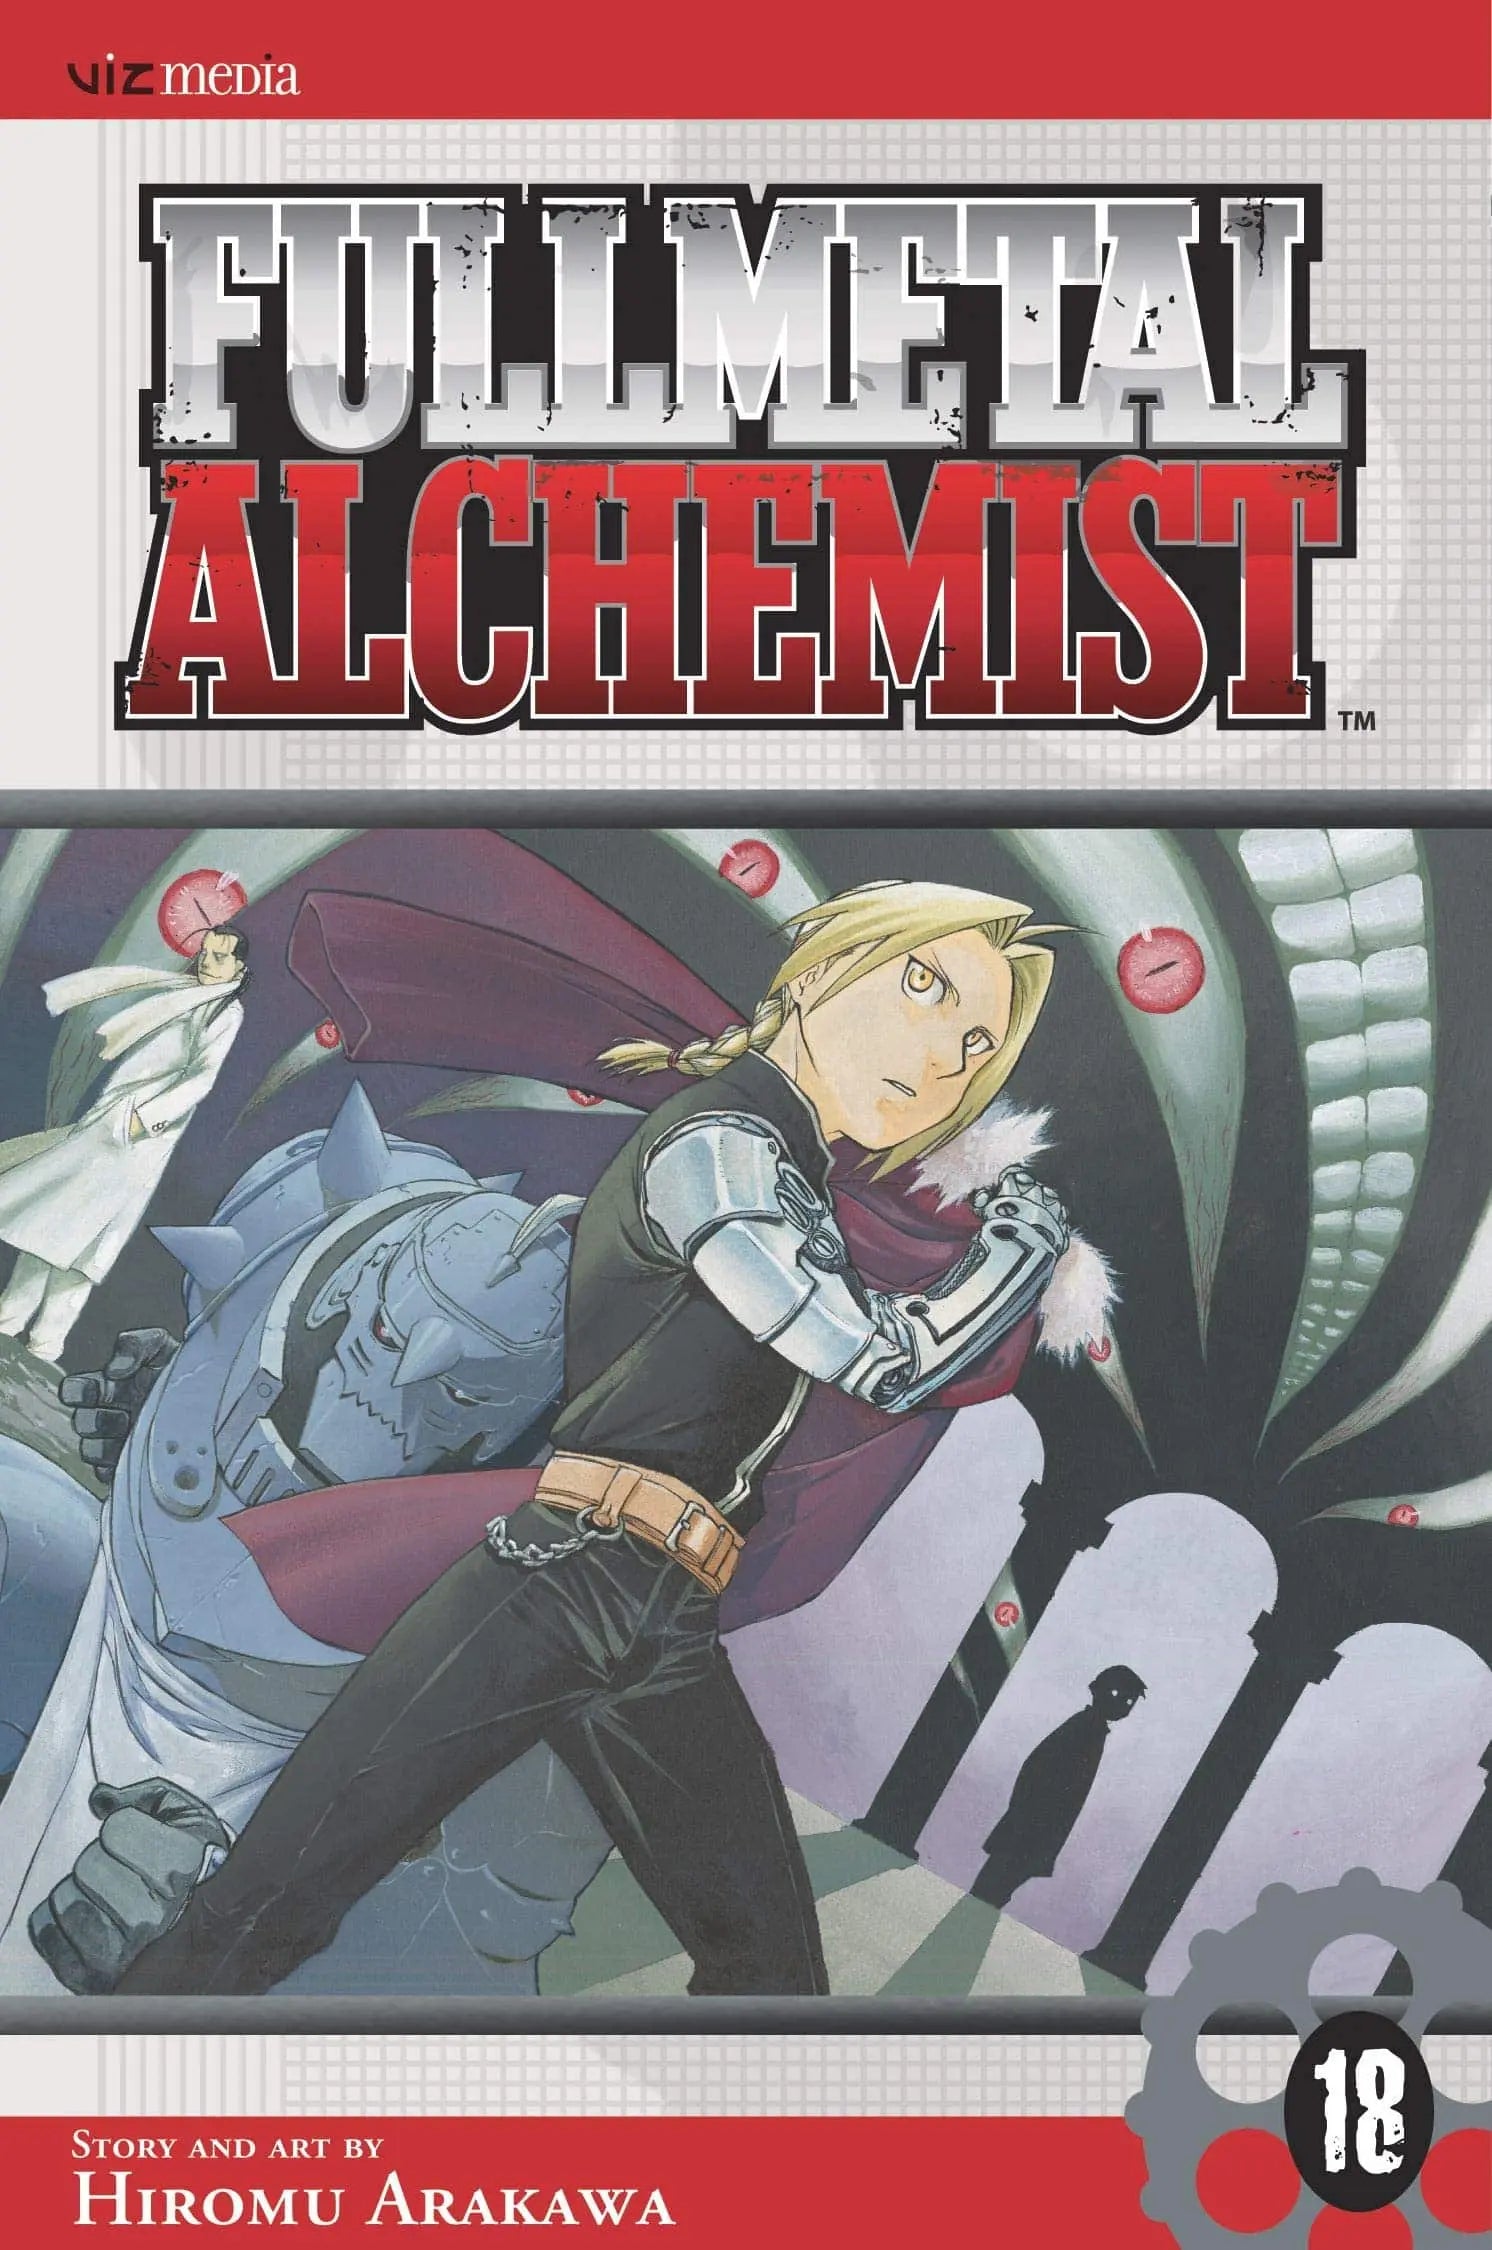 Fullmetal Alchemist, Vol. 18  Paperback  Illustrated, May 19 2009 King Gaming